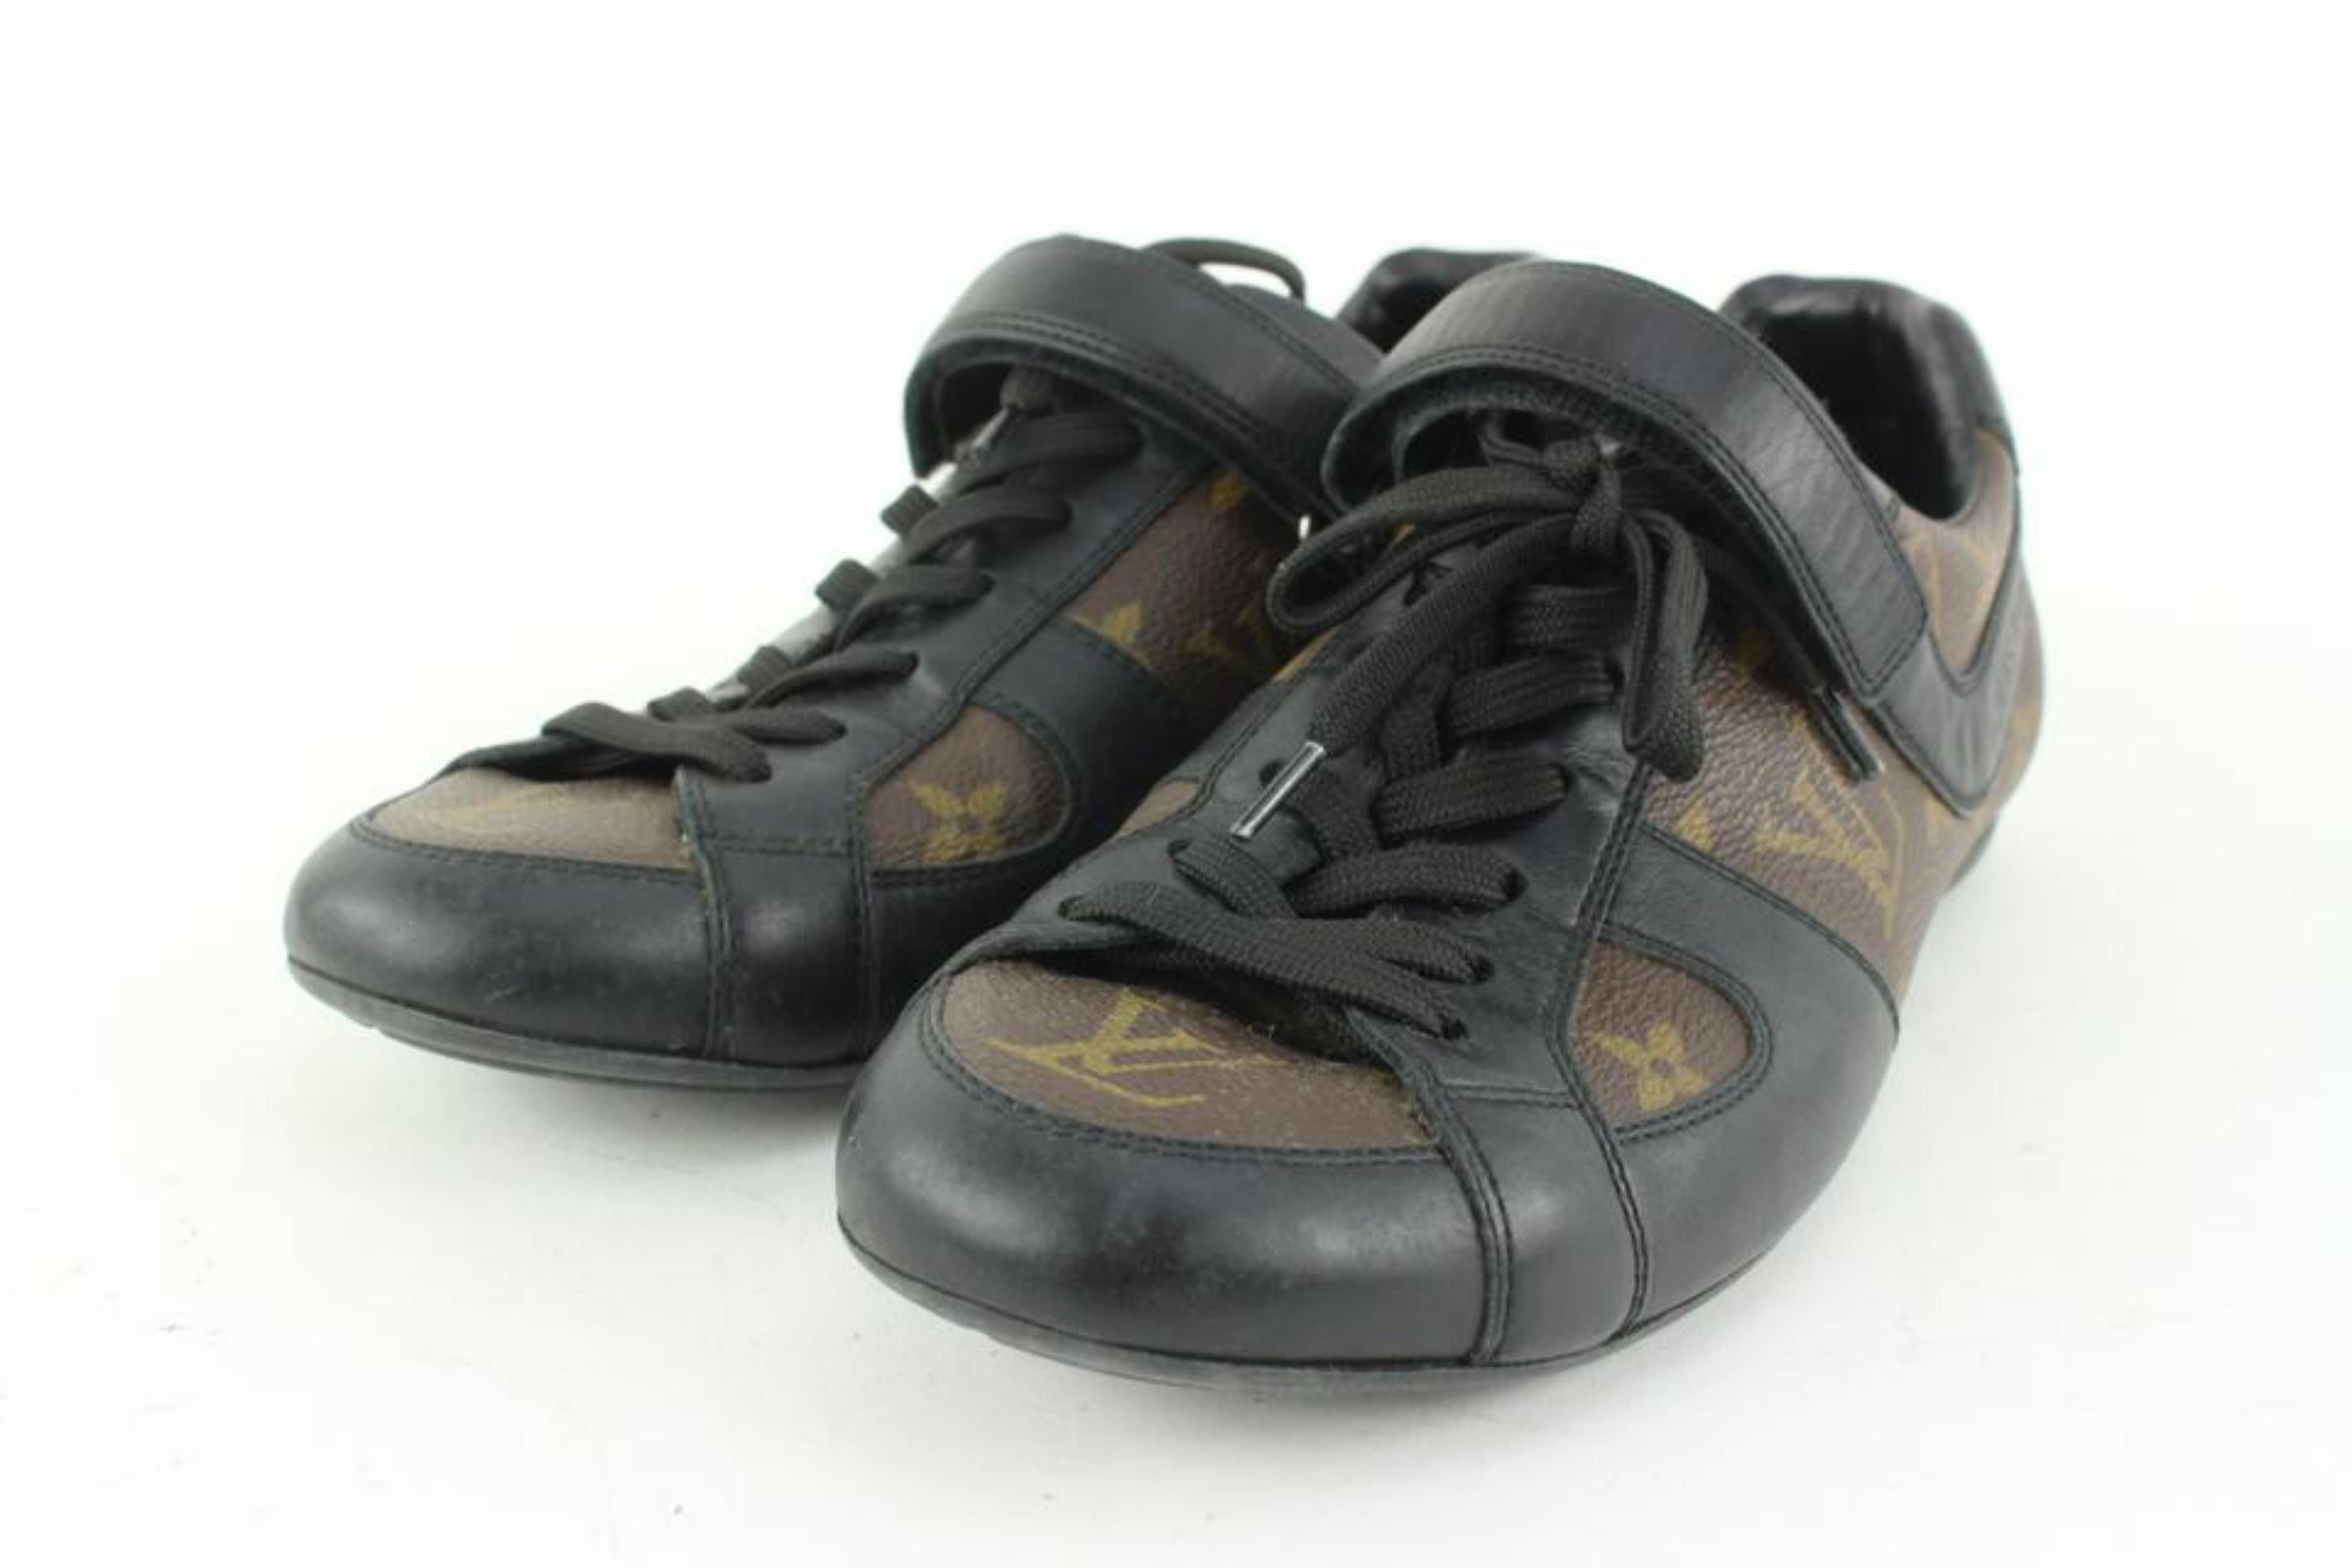 Louis Vuitton Men's 7 US Monogram Globetrotter Sneaker 111lv10
Date Code/Serial Number: P MS 0079
Made In: Italy
Measurements: Length:  10.75